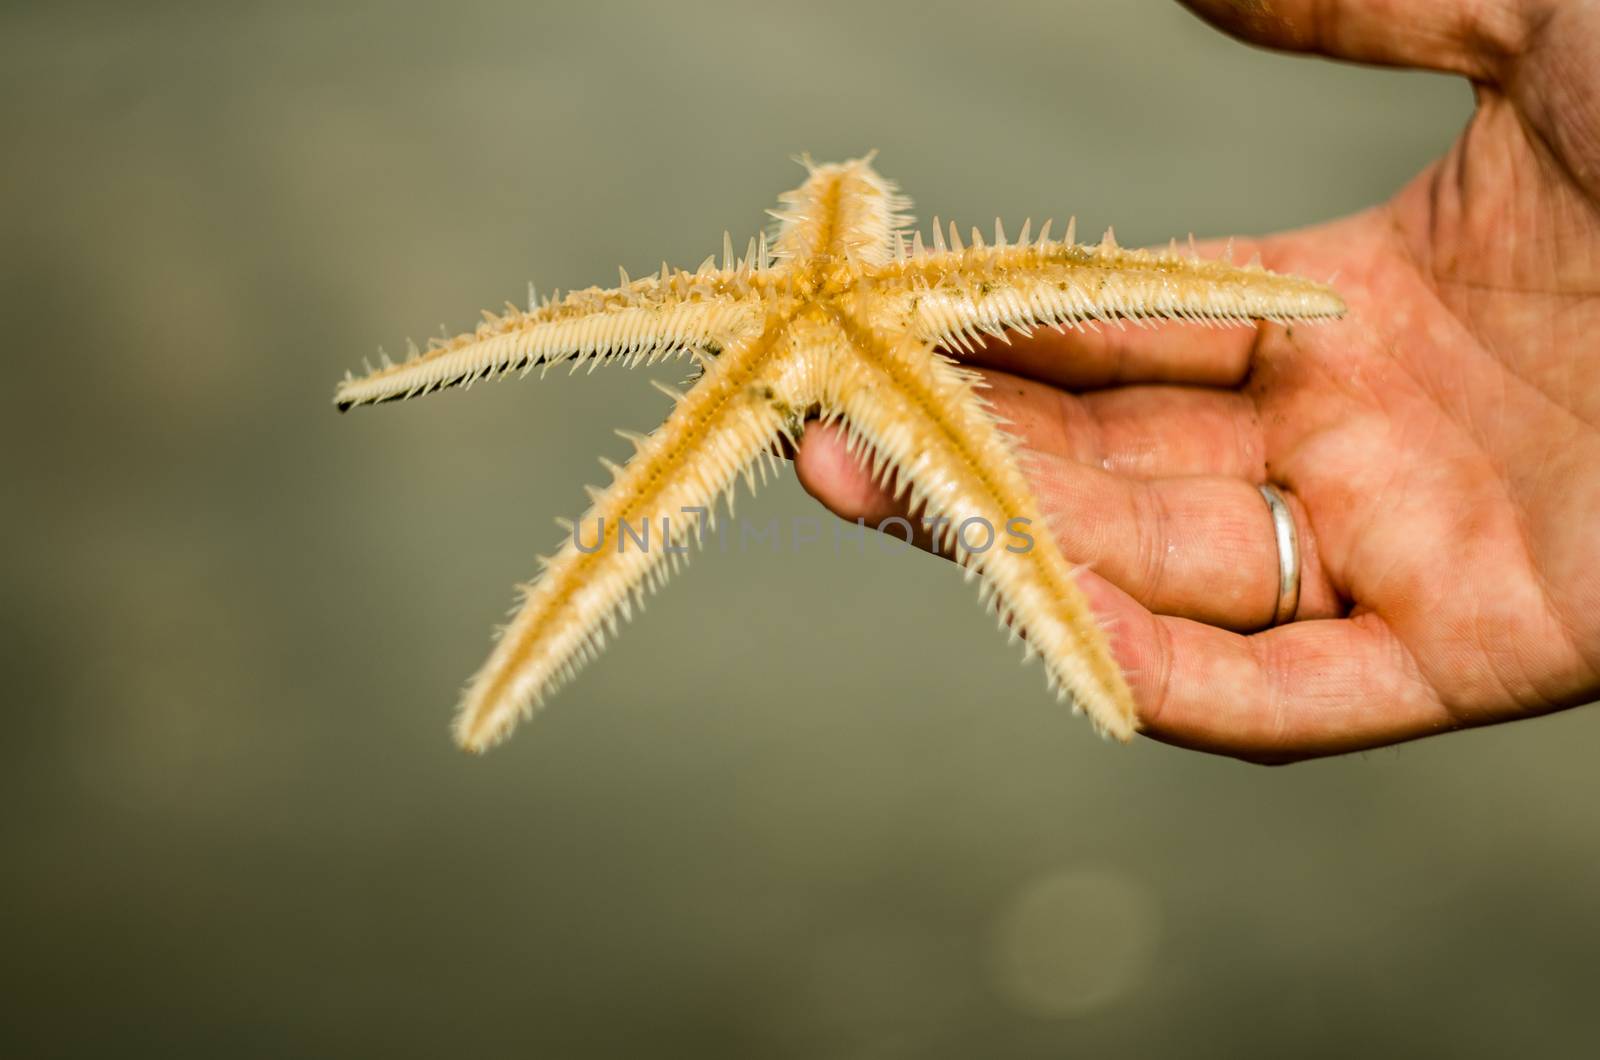 star fish on the hand by Desperada